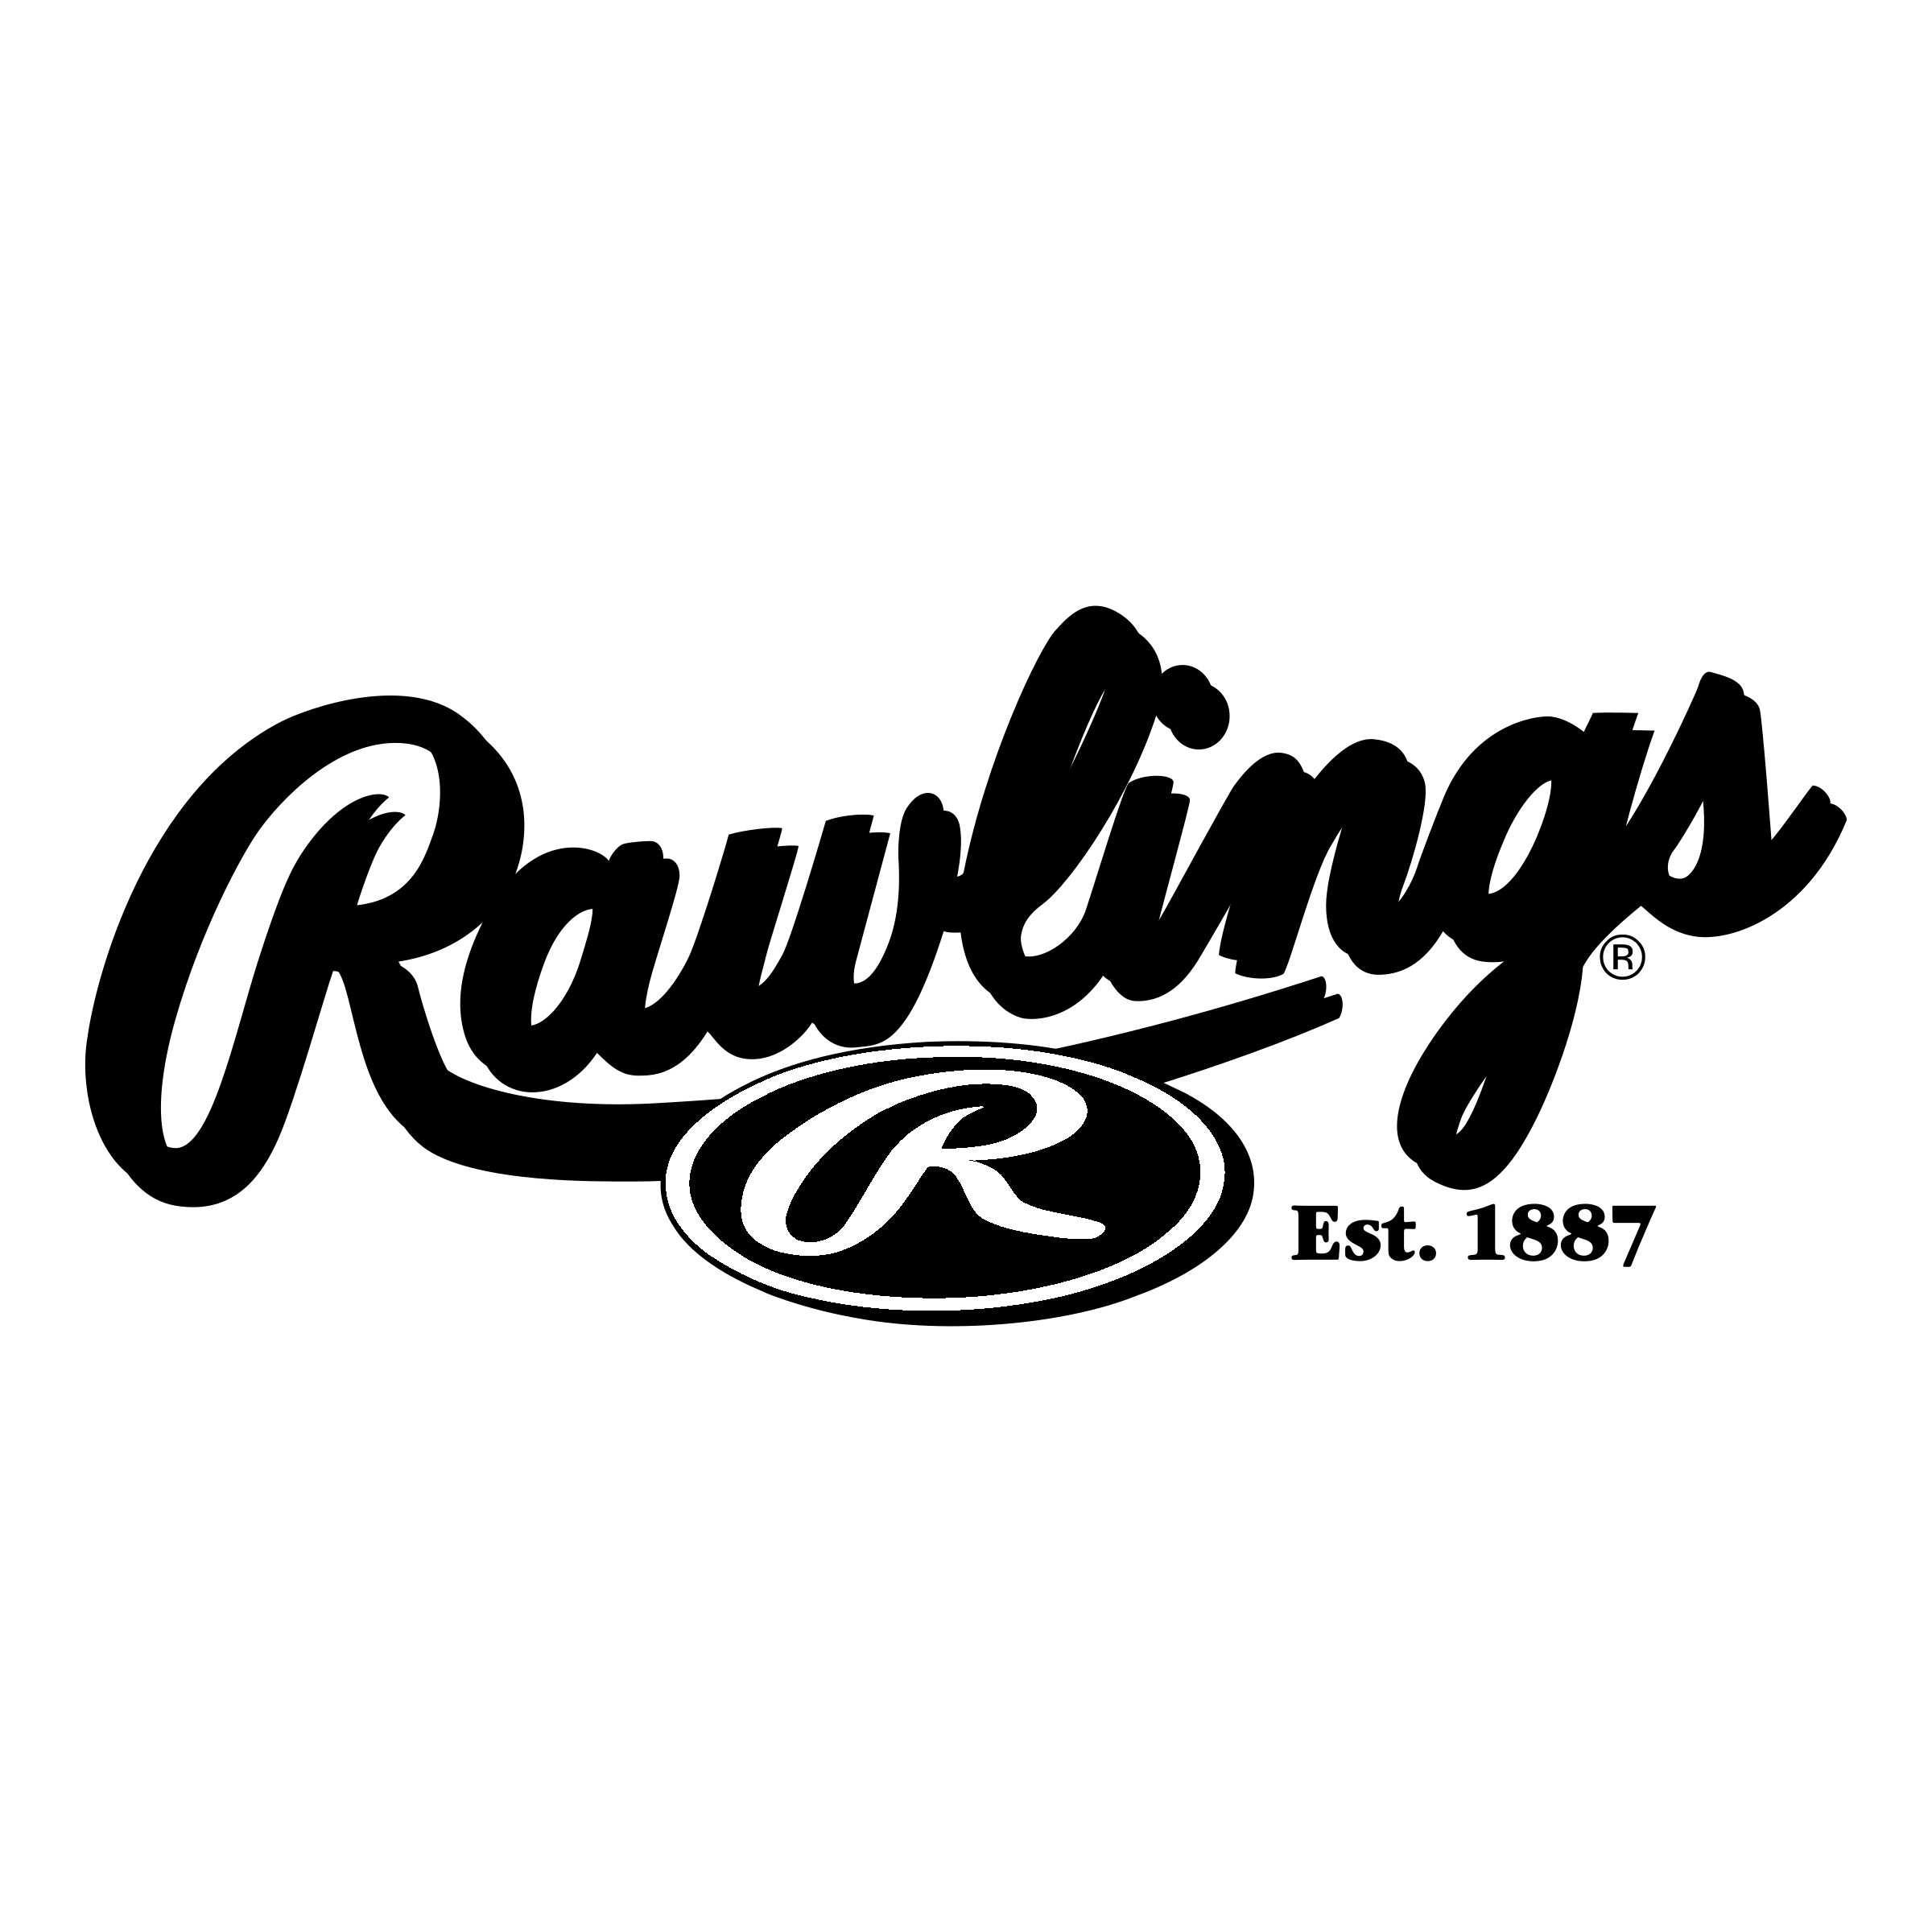 Rawlings R Logo - Rawlings Logo PNG Transparent & SVG Vector - Freebie Supply